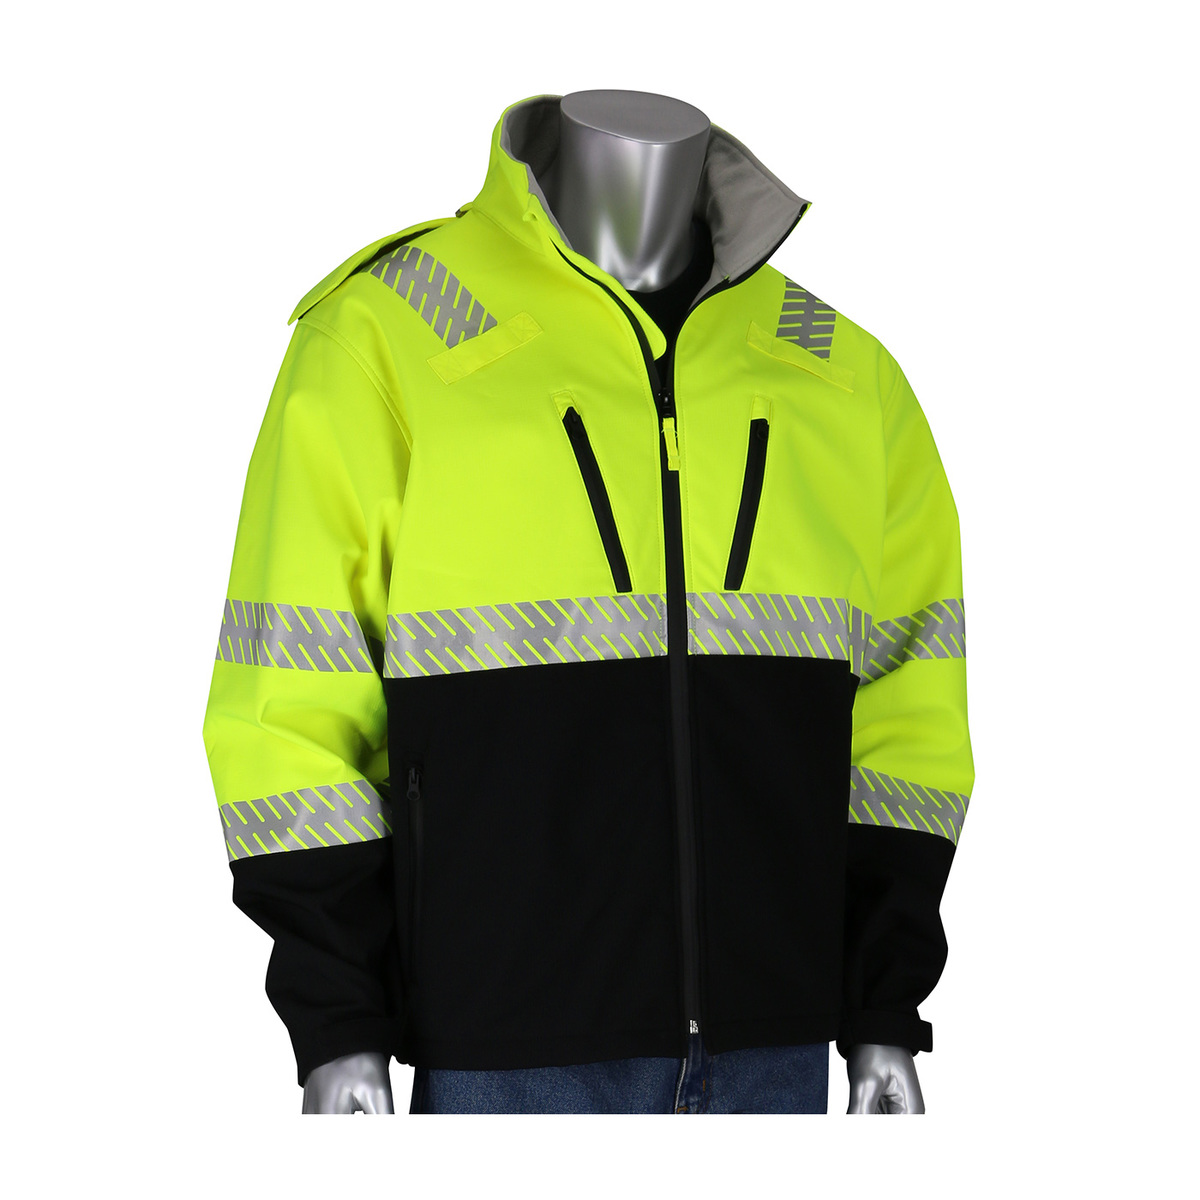 PIP® 3X Hi-Viz Yellow/Black Ripstop Thermoplastic/Polyester/Fleece Jacket